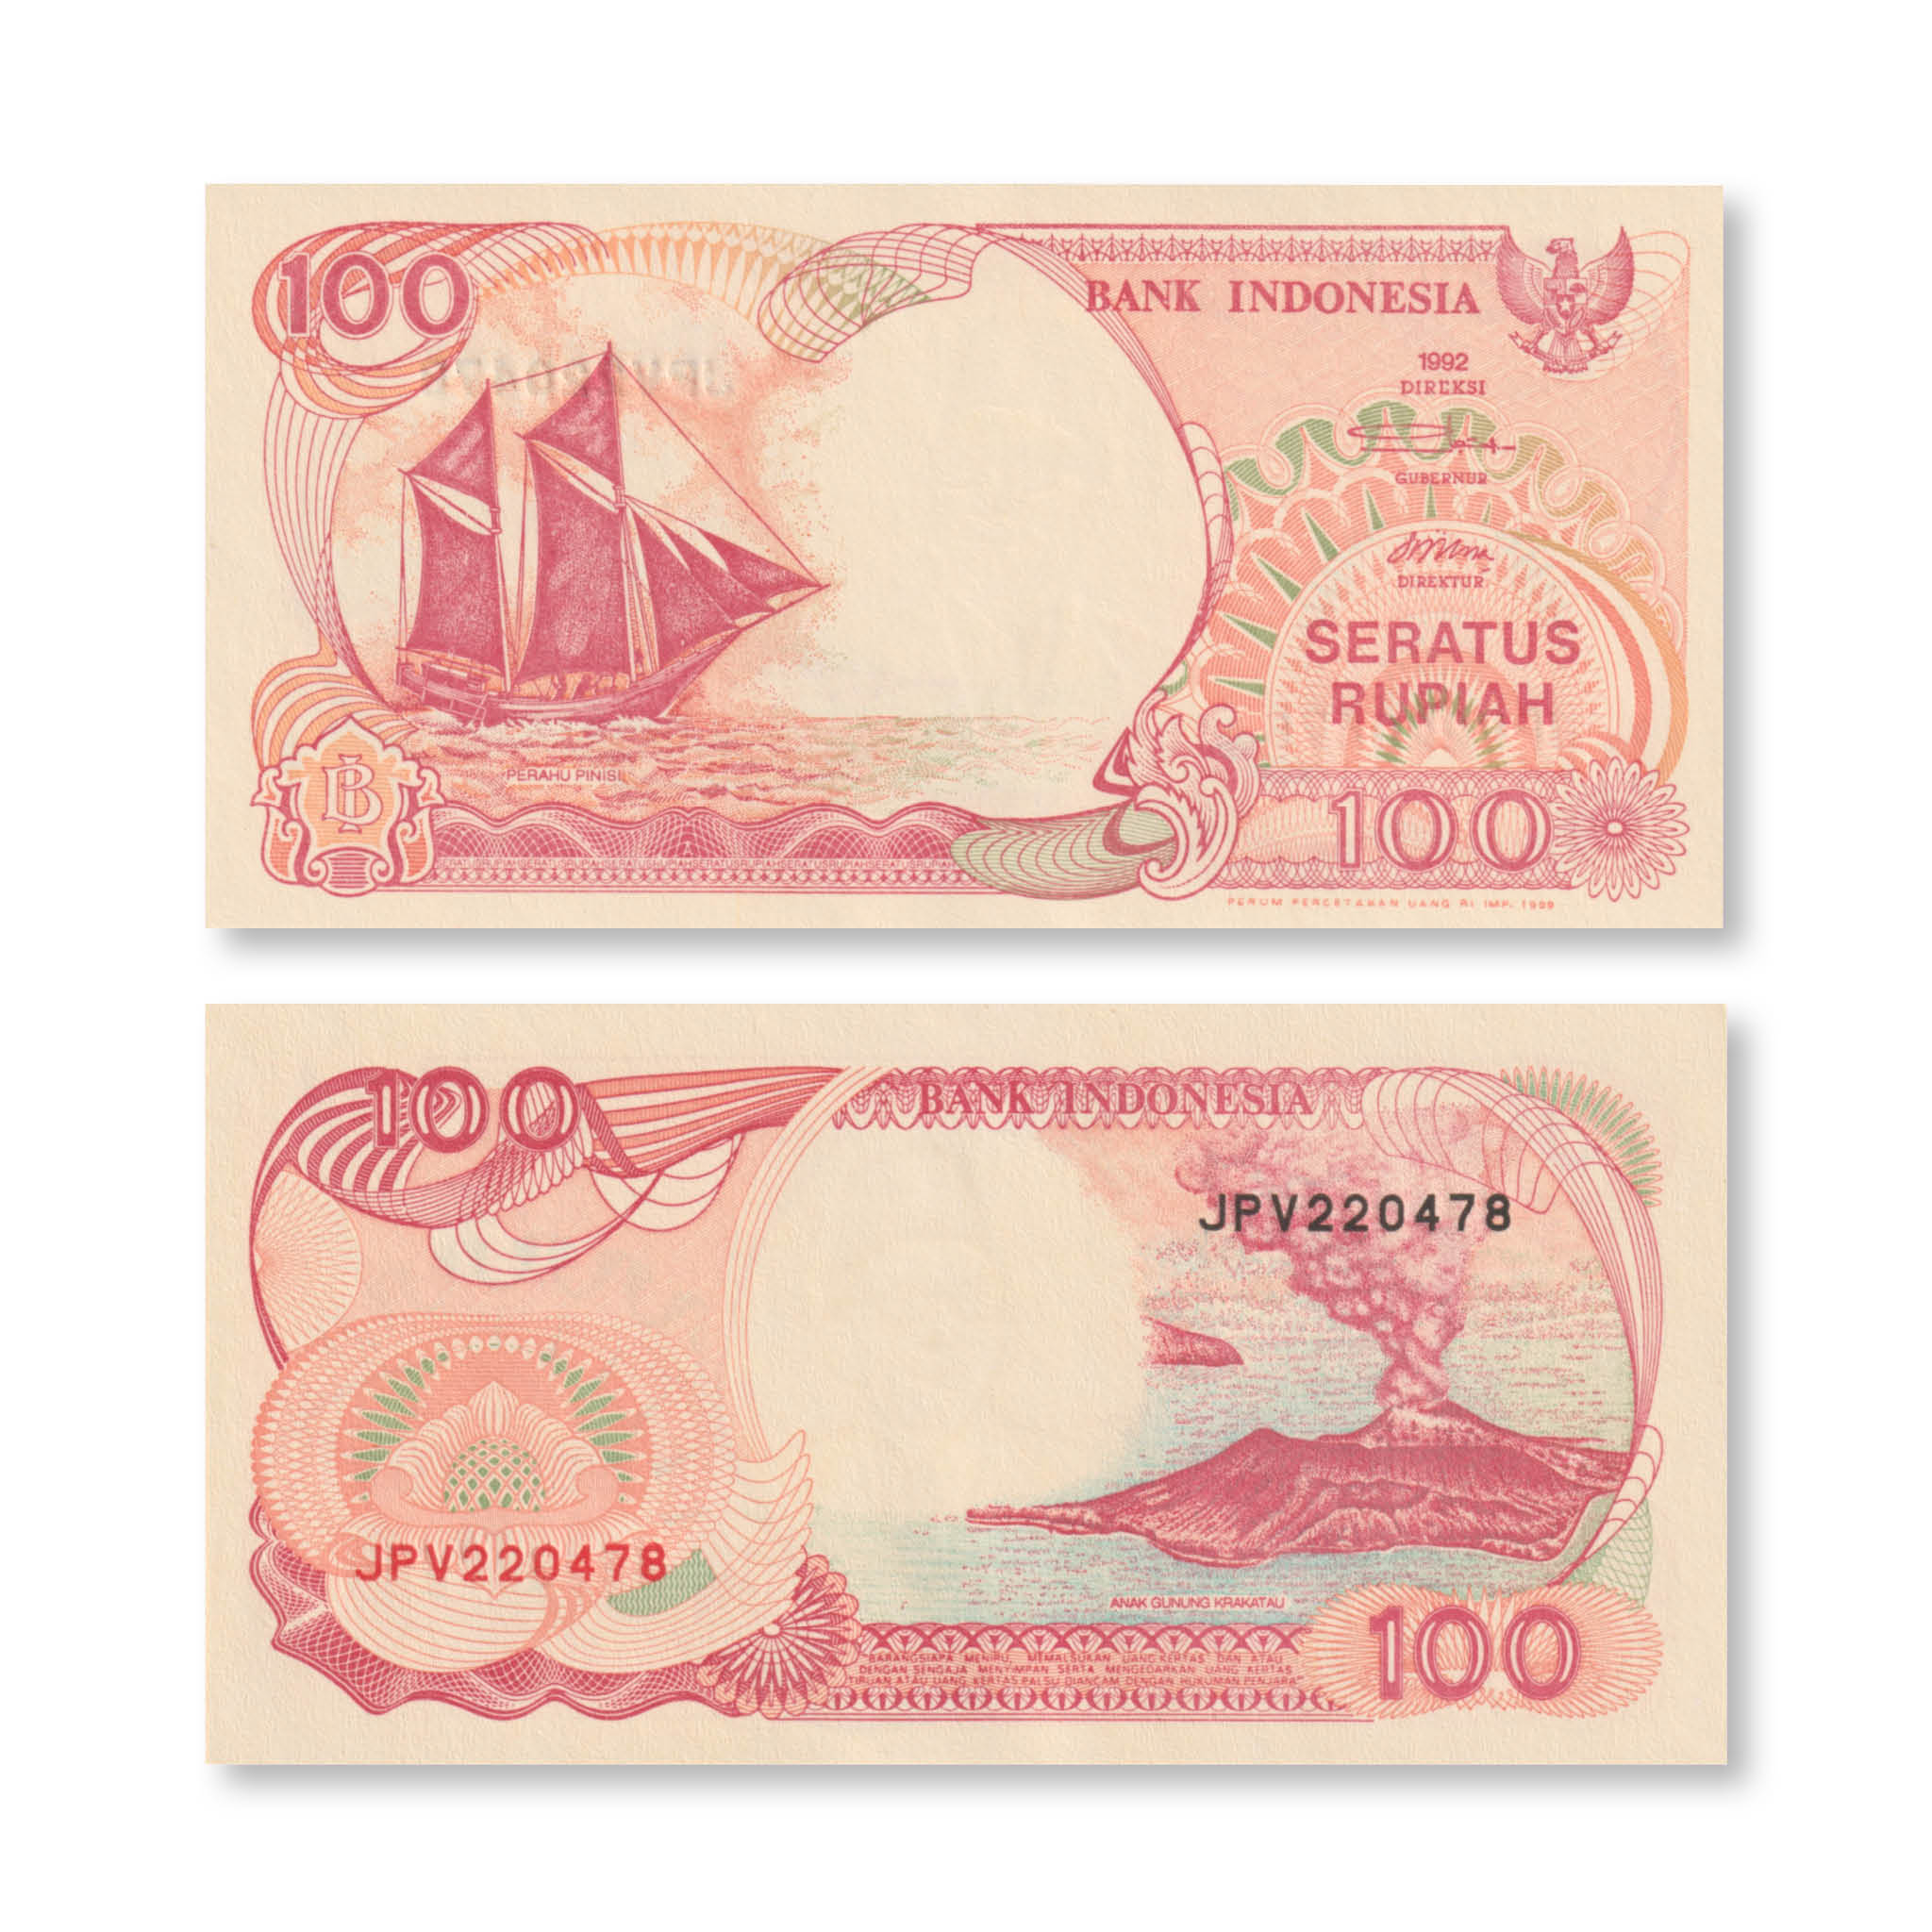 Indonesia 100 Rupiah, 1992/1999, B585g, P127g, UNC - Robert's World Money - World Banknotes